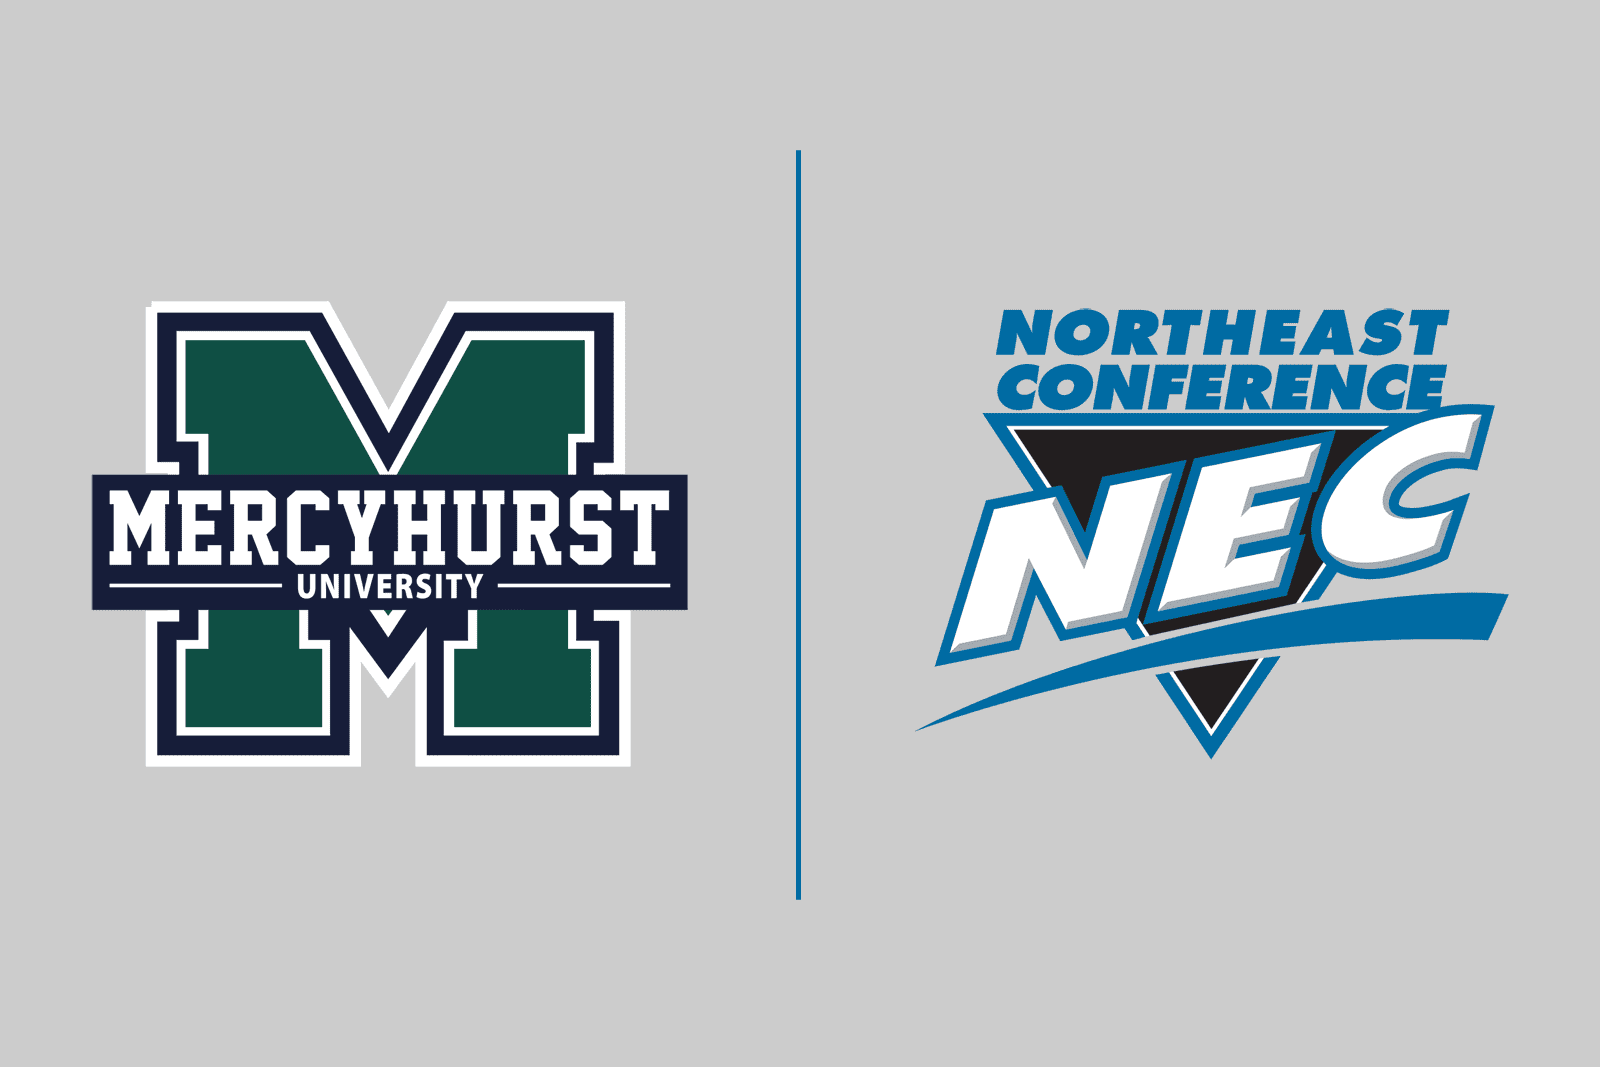 Mercyhurst-Northeast Conference